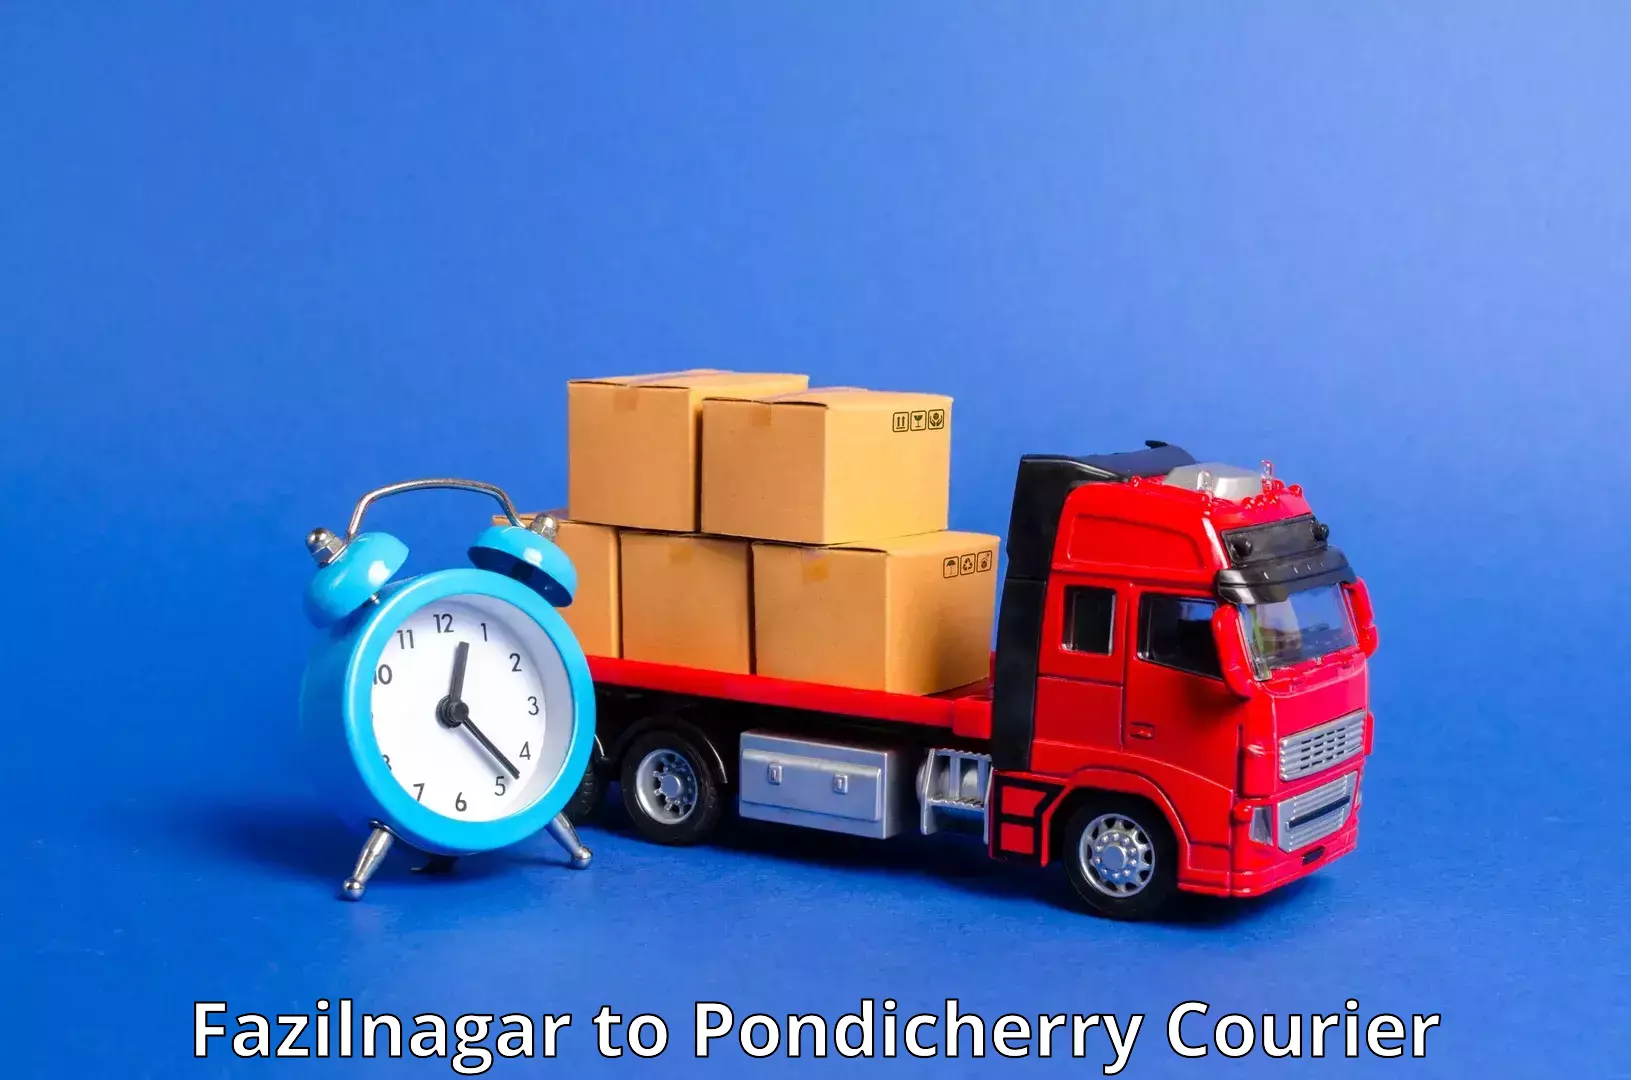 Courier service comparison in Fazilnagar to Metttupalayam